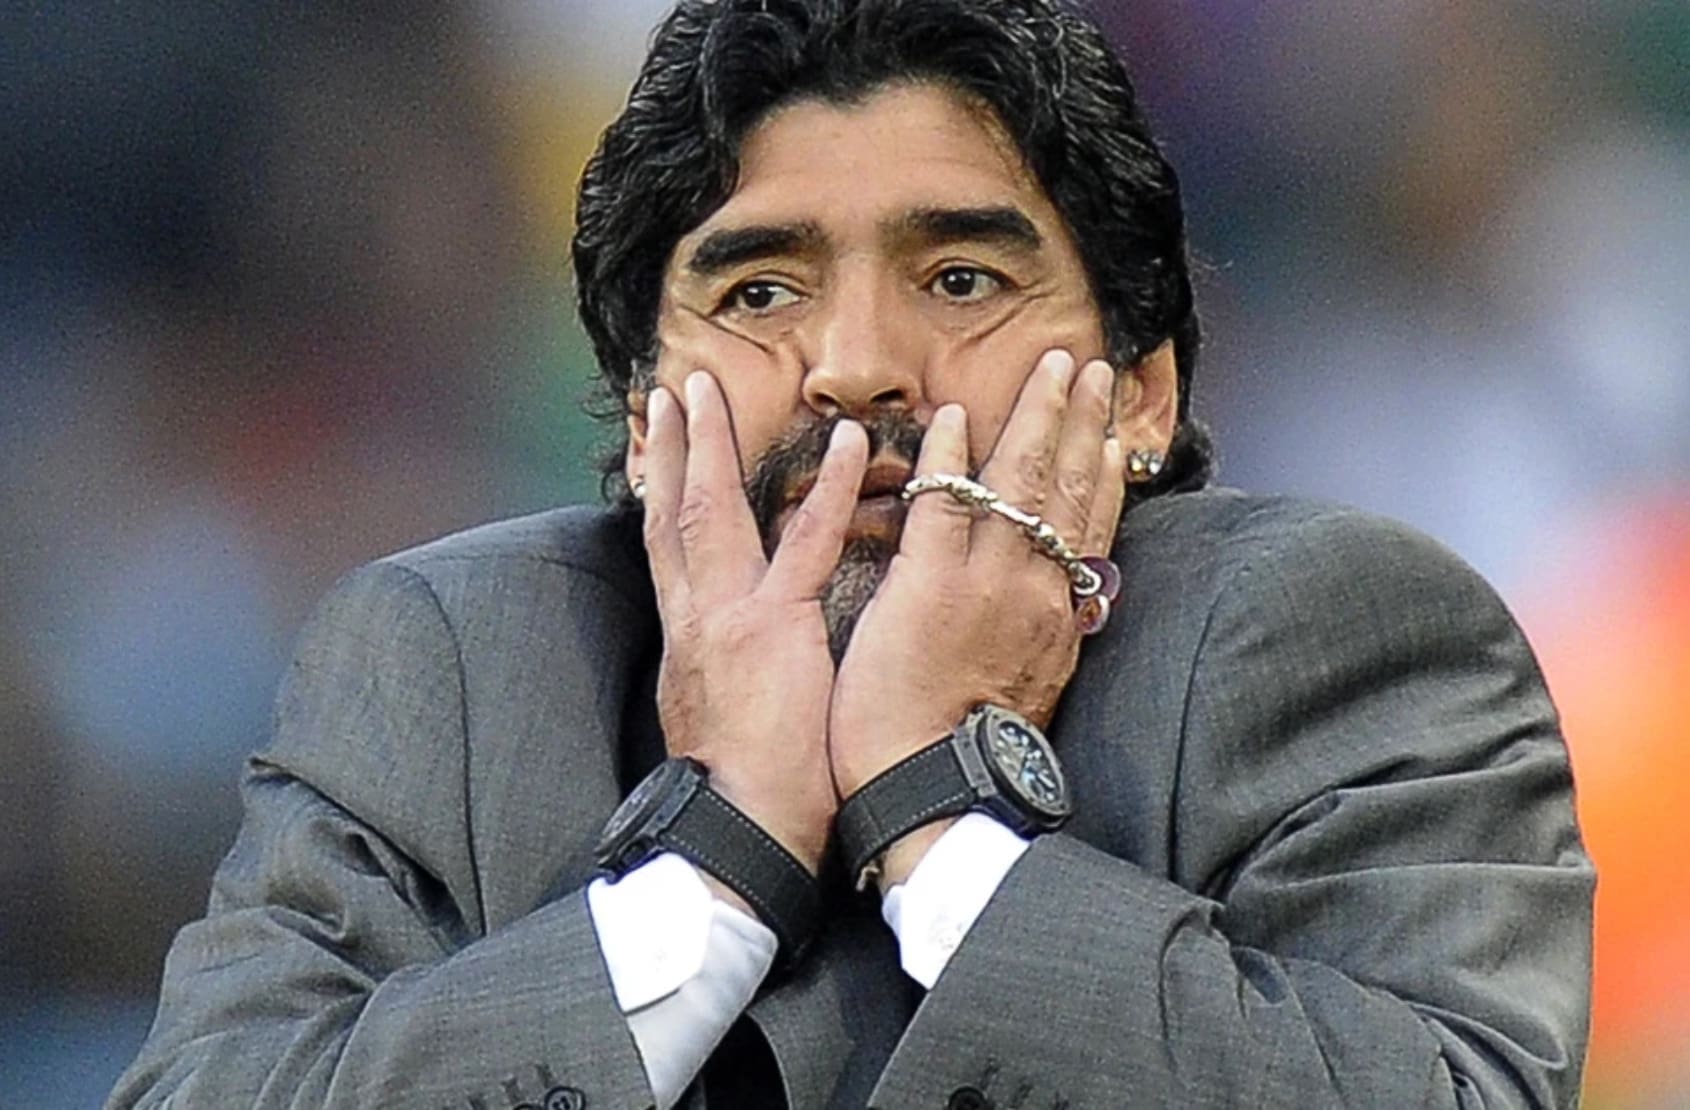 Maradona wore two watches